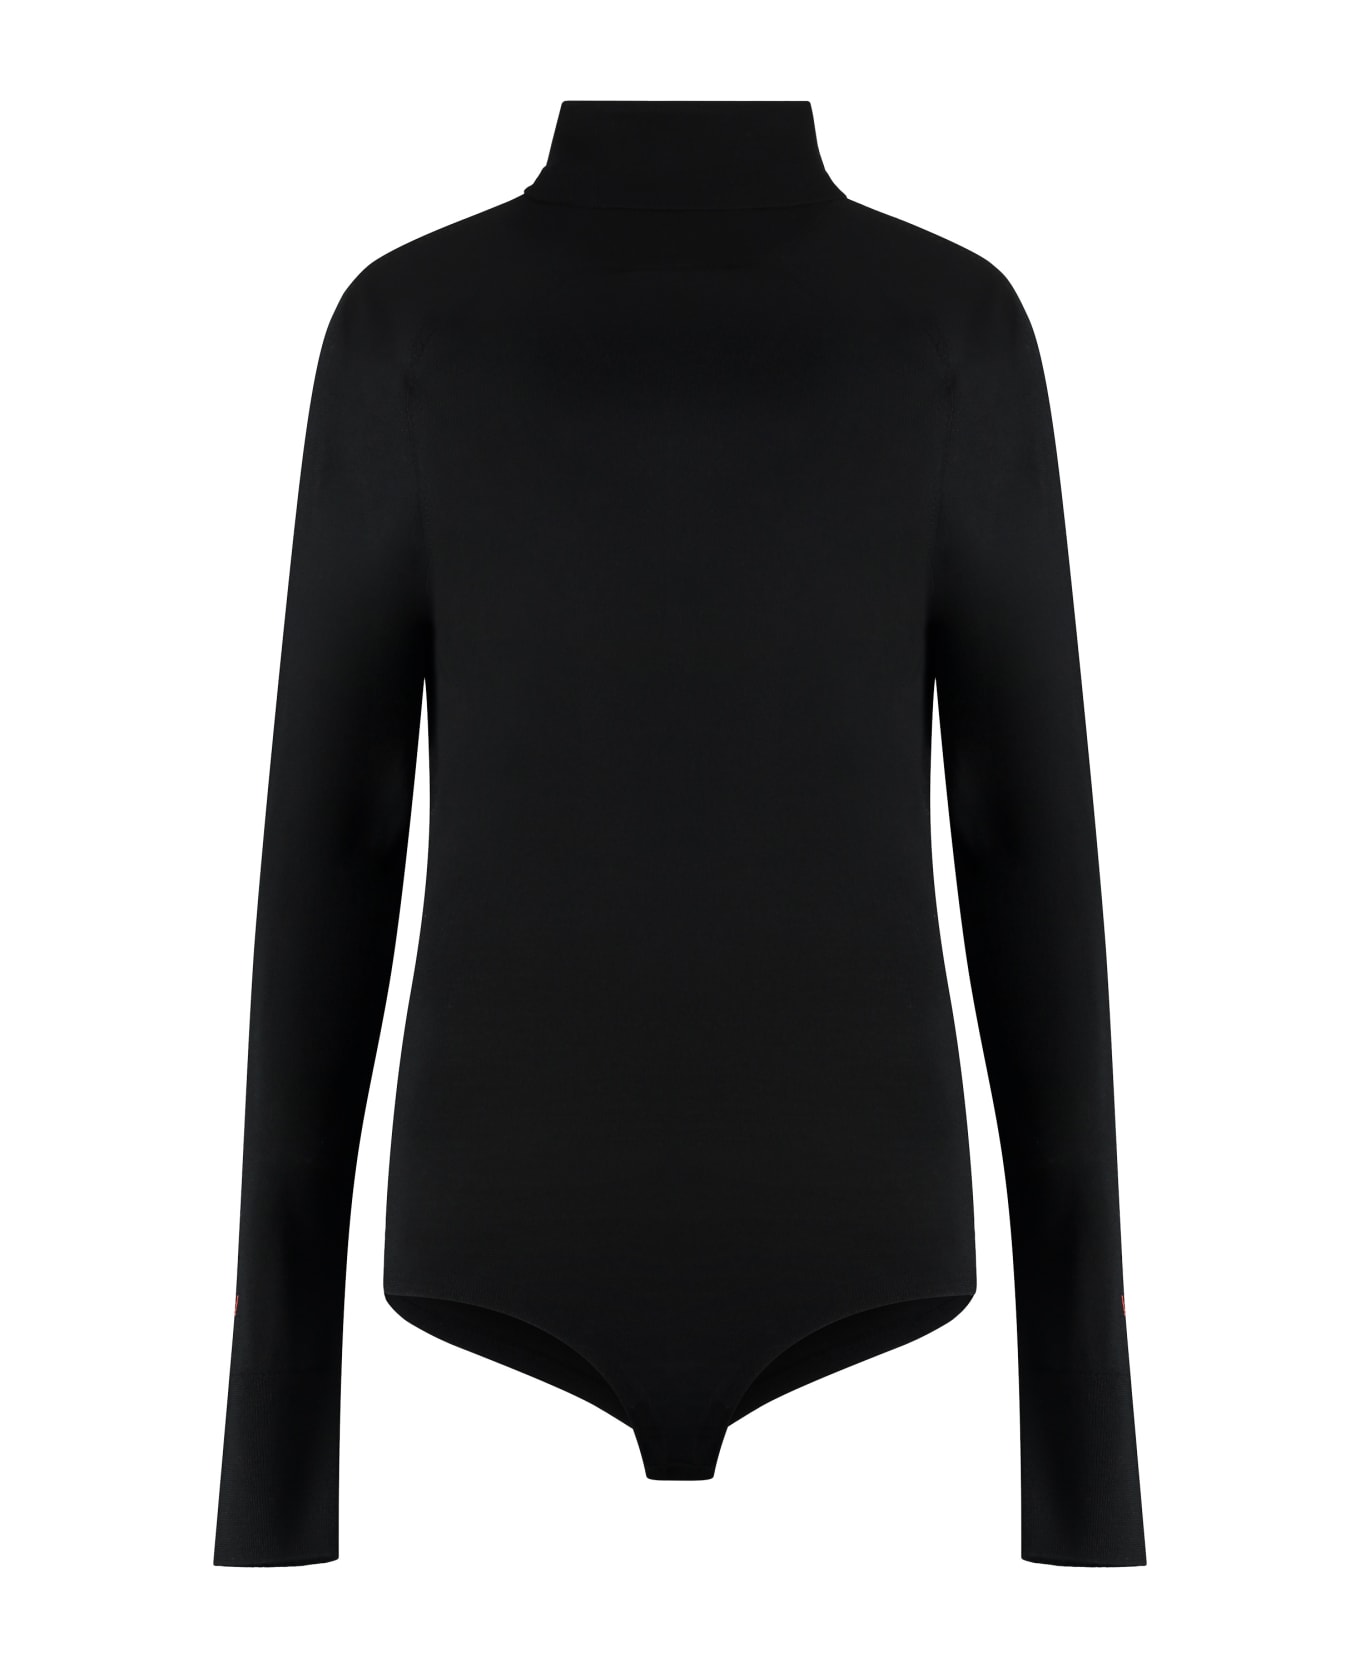 Victoria Beckham Knit Bodysuit - black ボディスーツ